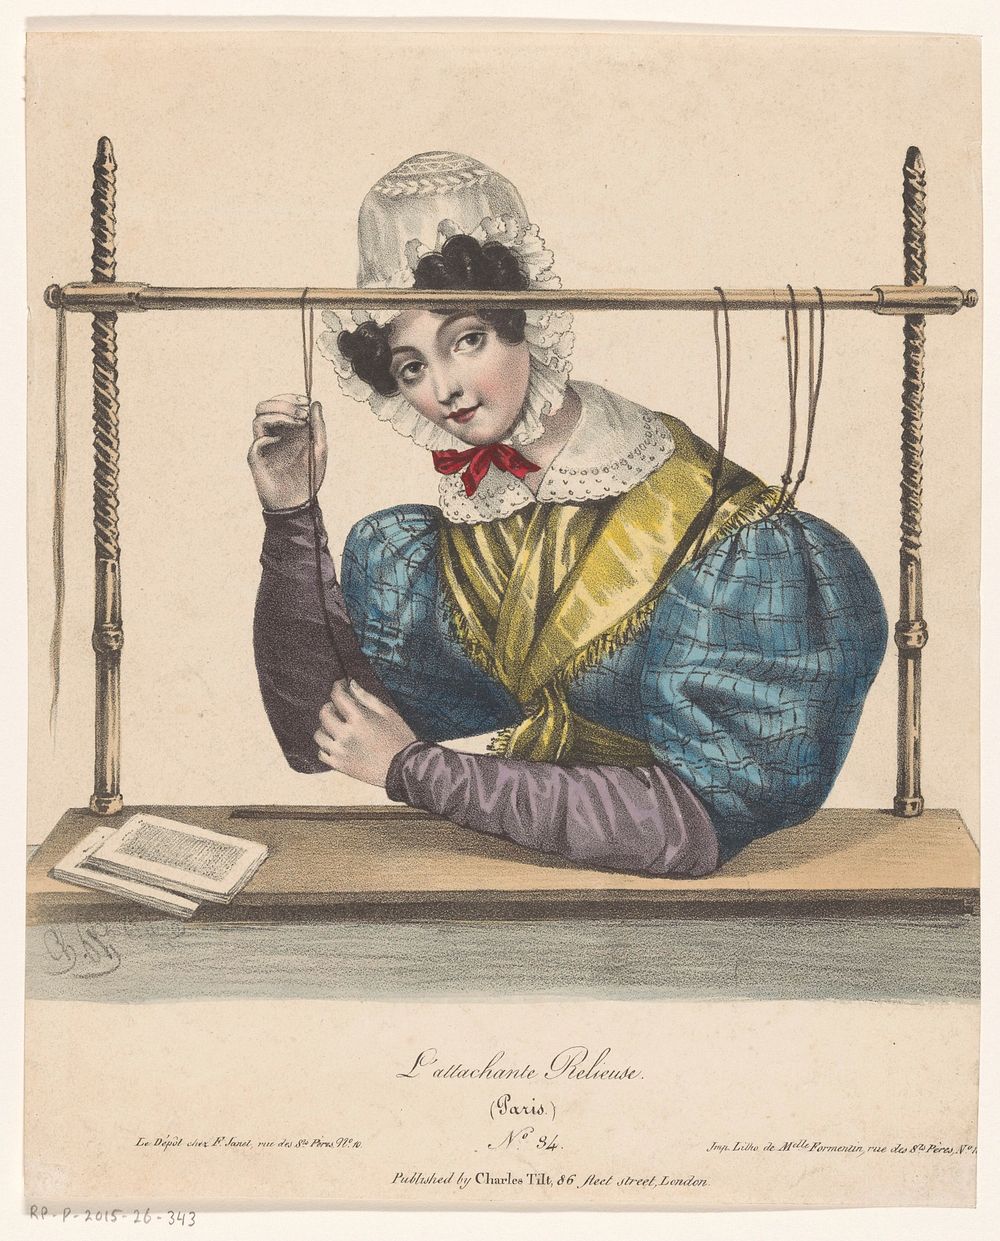 Boekbindster (1828) by Charles Philipon, Mademoiselle Formentin Joséphine Clémence, François Janet and Charles Tilt